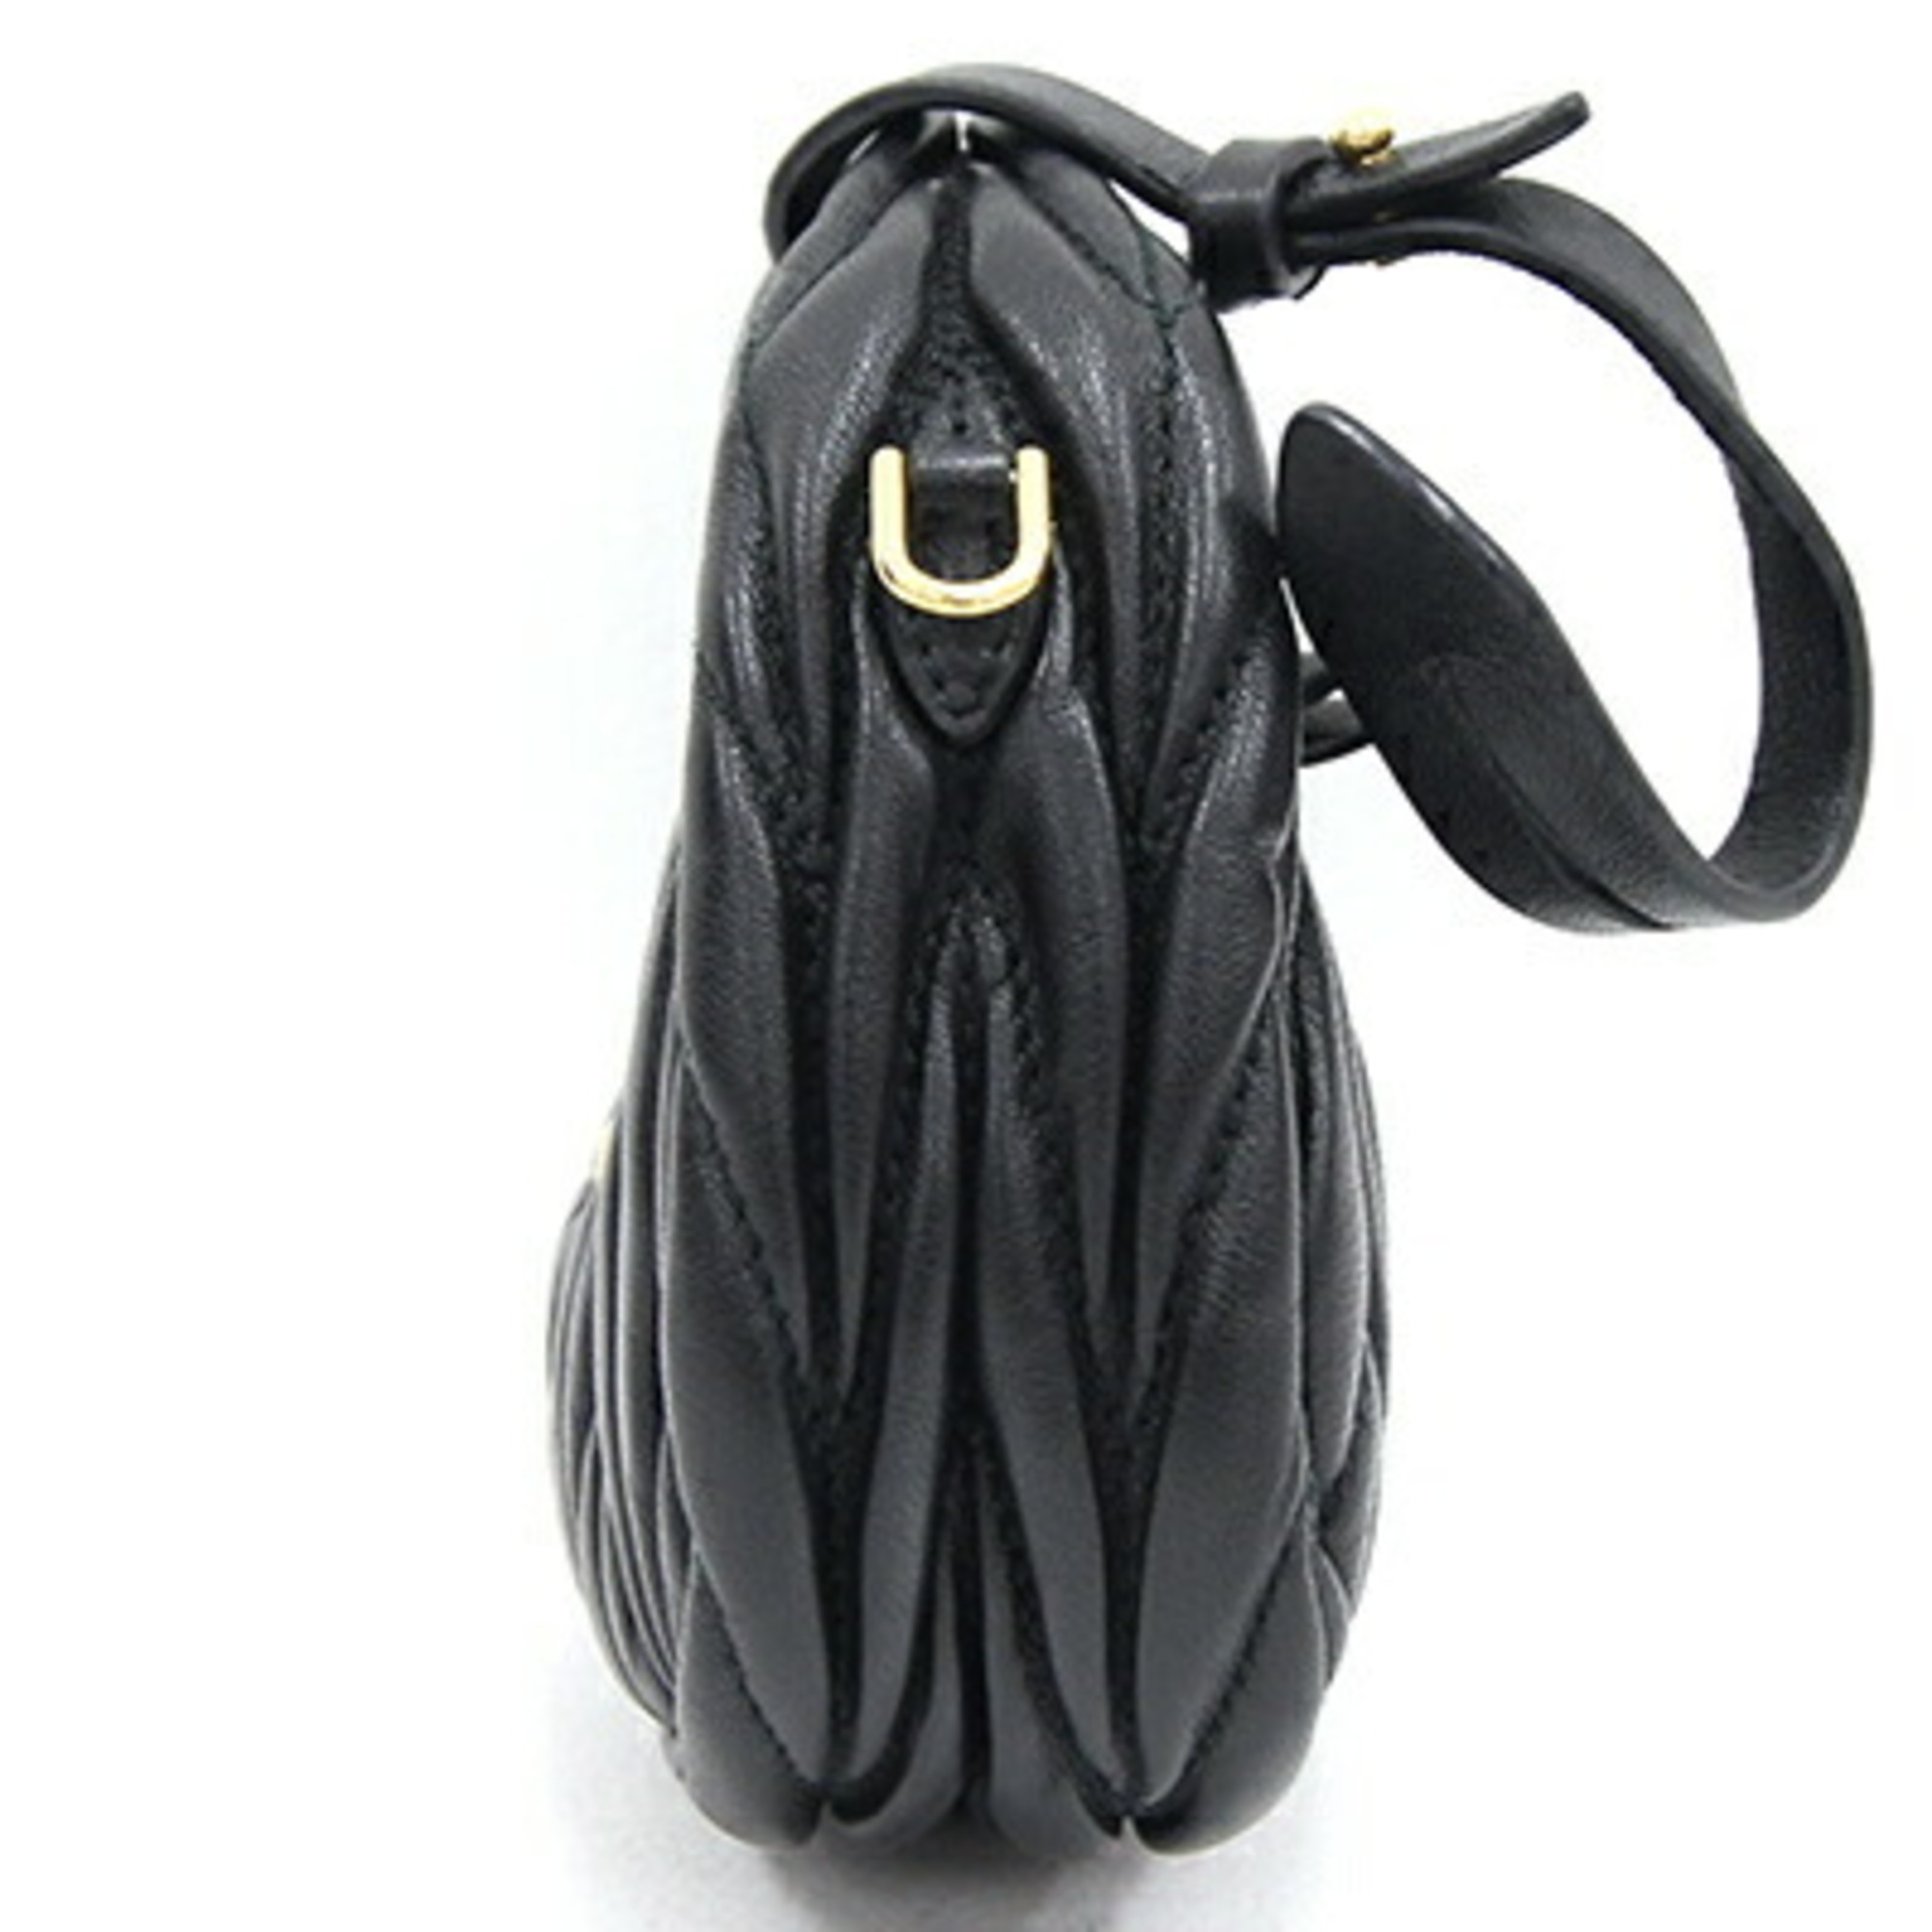 Miu Miu Miu Shoulder Bag Wonder Matelasse Leather Hobo 5NR019 Black Pochette Gathered Women's MIUMIU